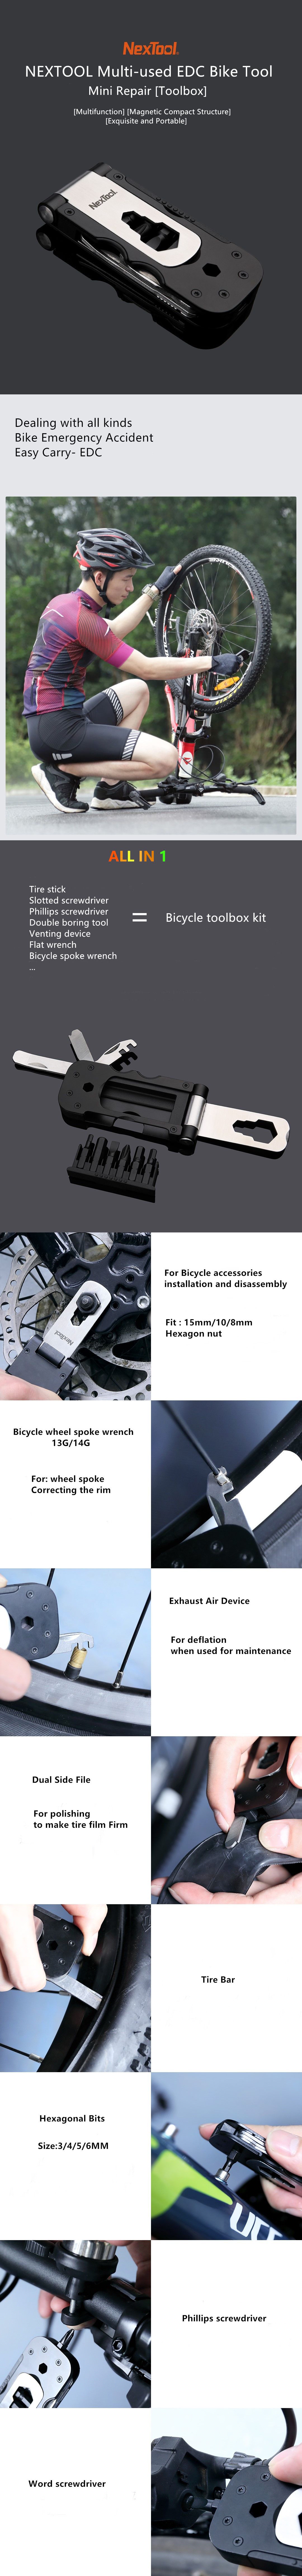 NEXTOOL-Multi-used-EDC-Magnetic-Screwdriver-Bicycle-Repair-Compact-DIY-Household-Bike-Tool-From-1545351